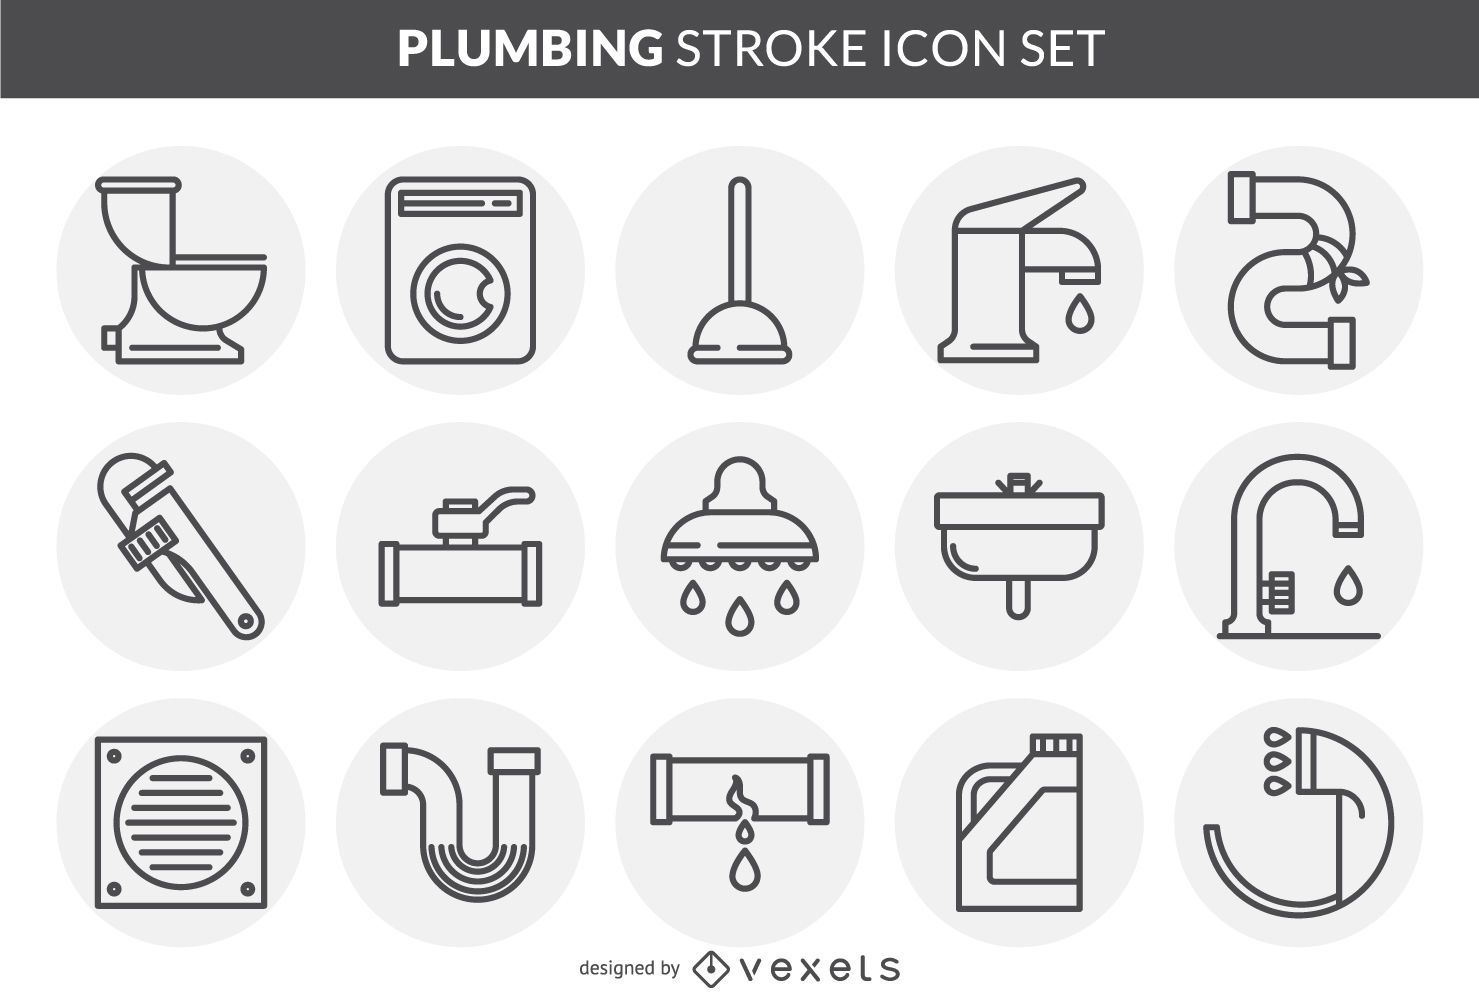 Plumbing stroke icon set